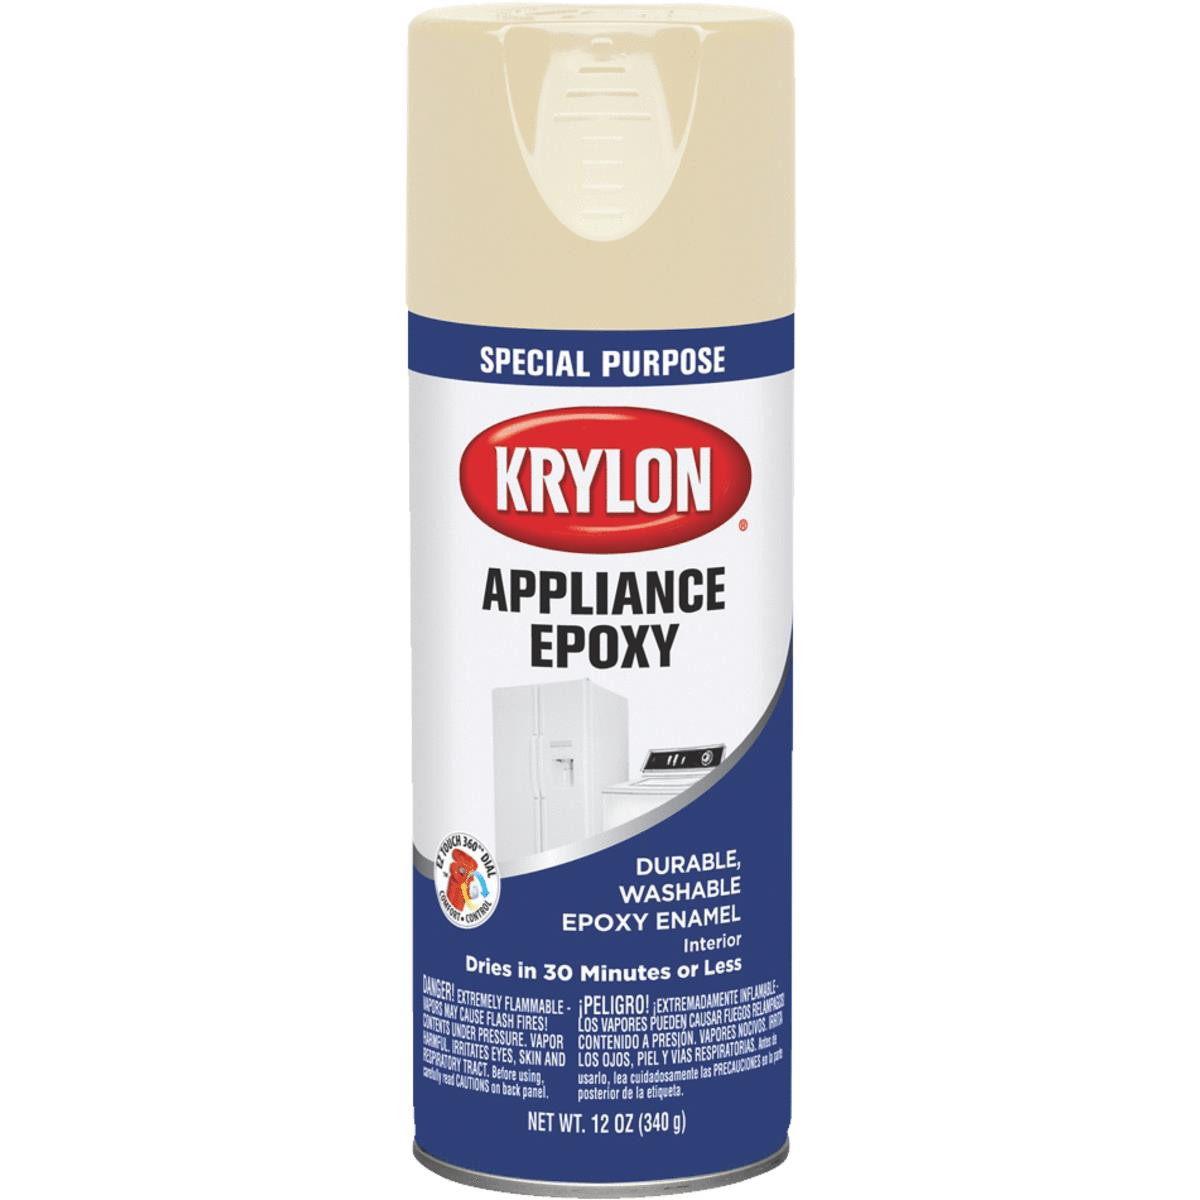 Best ideas about Appliance Paint Colors
. Save or Pin Krylon Appliance Epoxy Spray Paint Now.